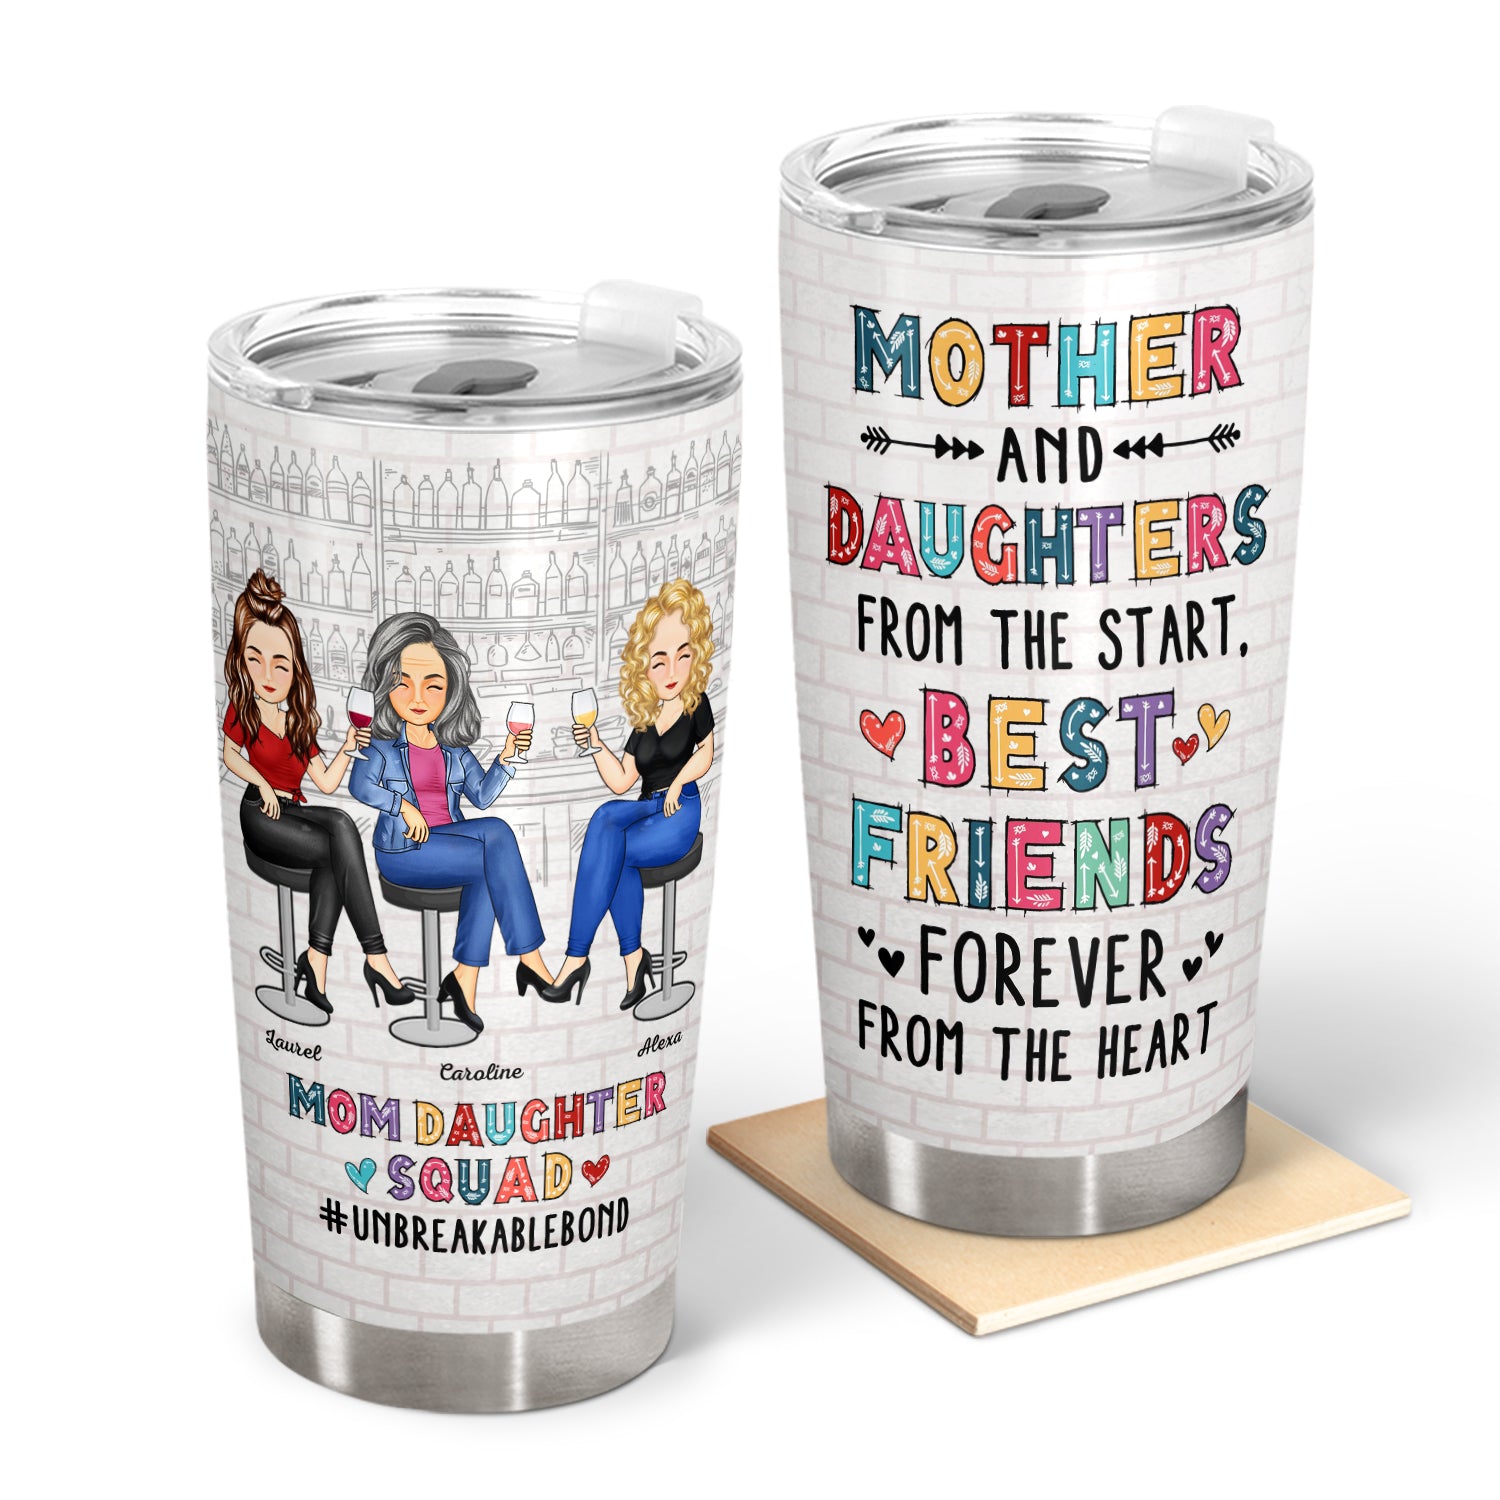 Mom Daughter Squad Unbreakable Bond - Birthday, Loving Gift For Mother, Mama, Grandma, Grandmother - Personalized Custom Tumbler